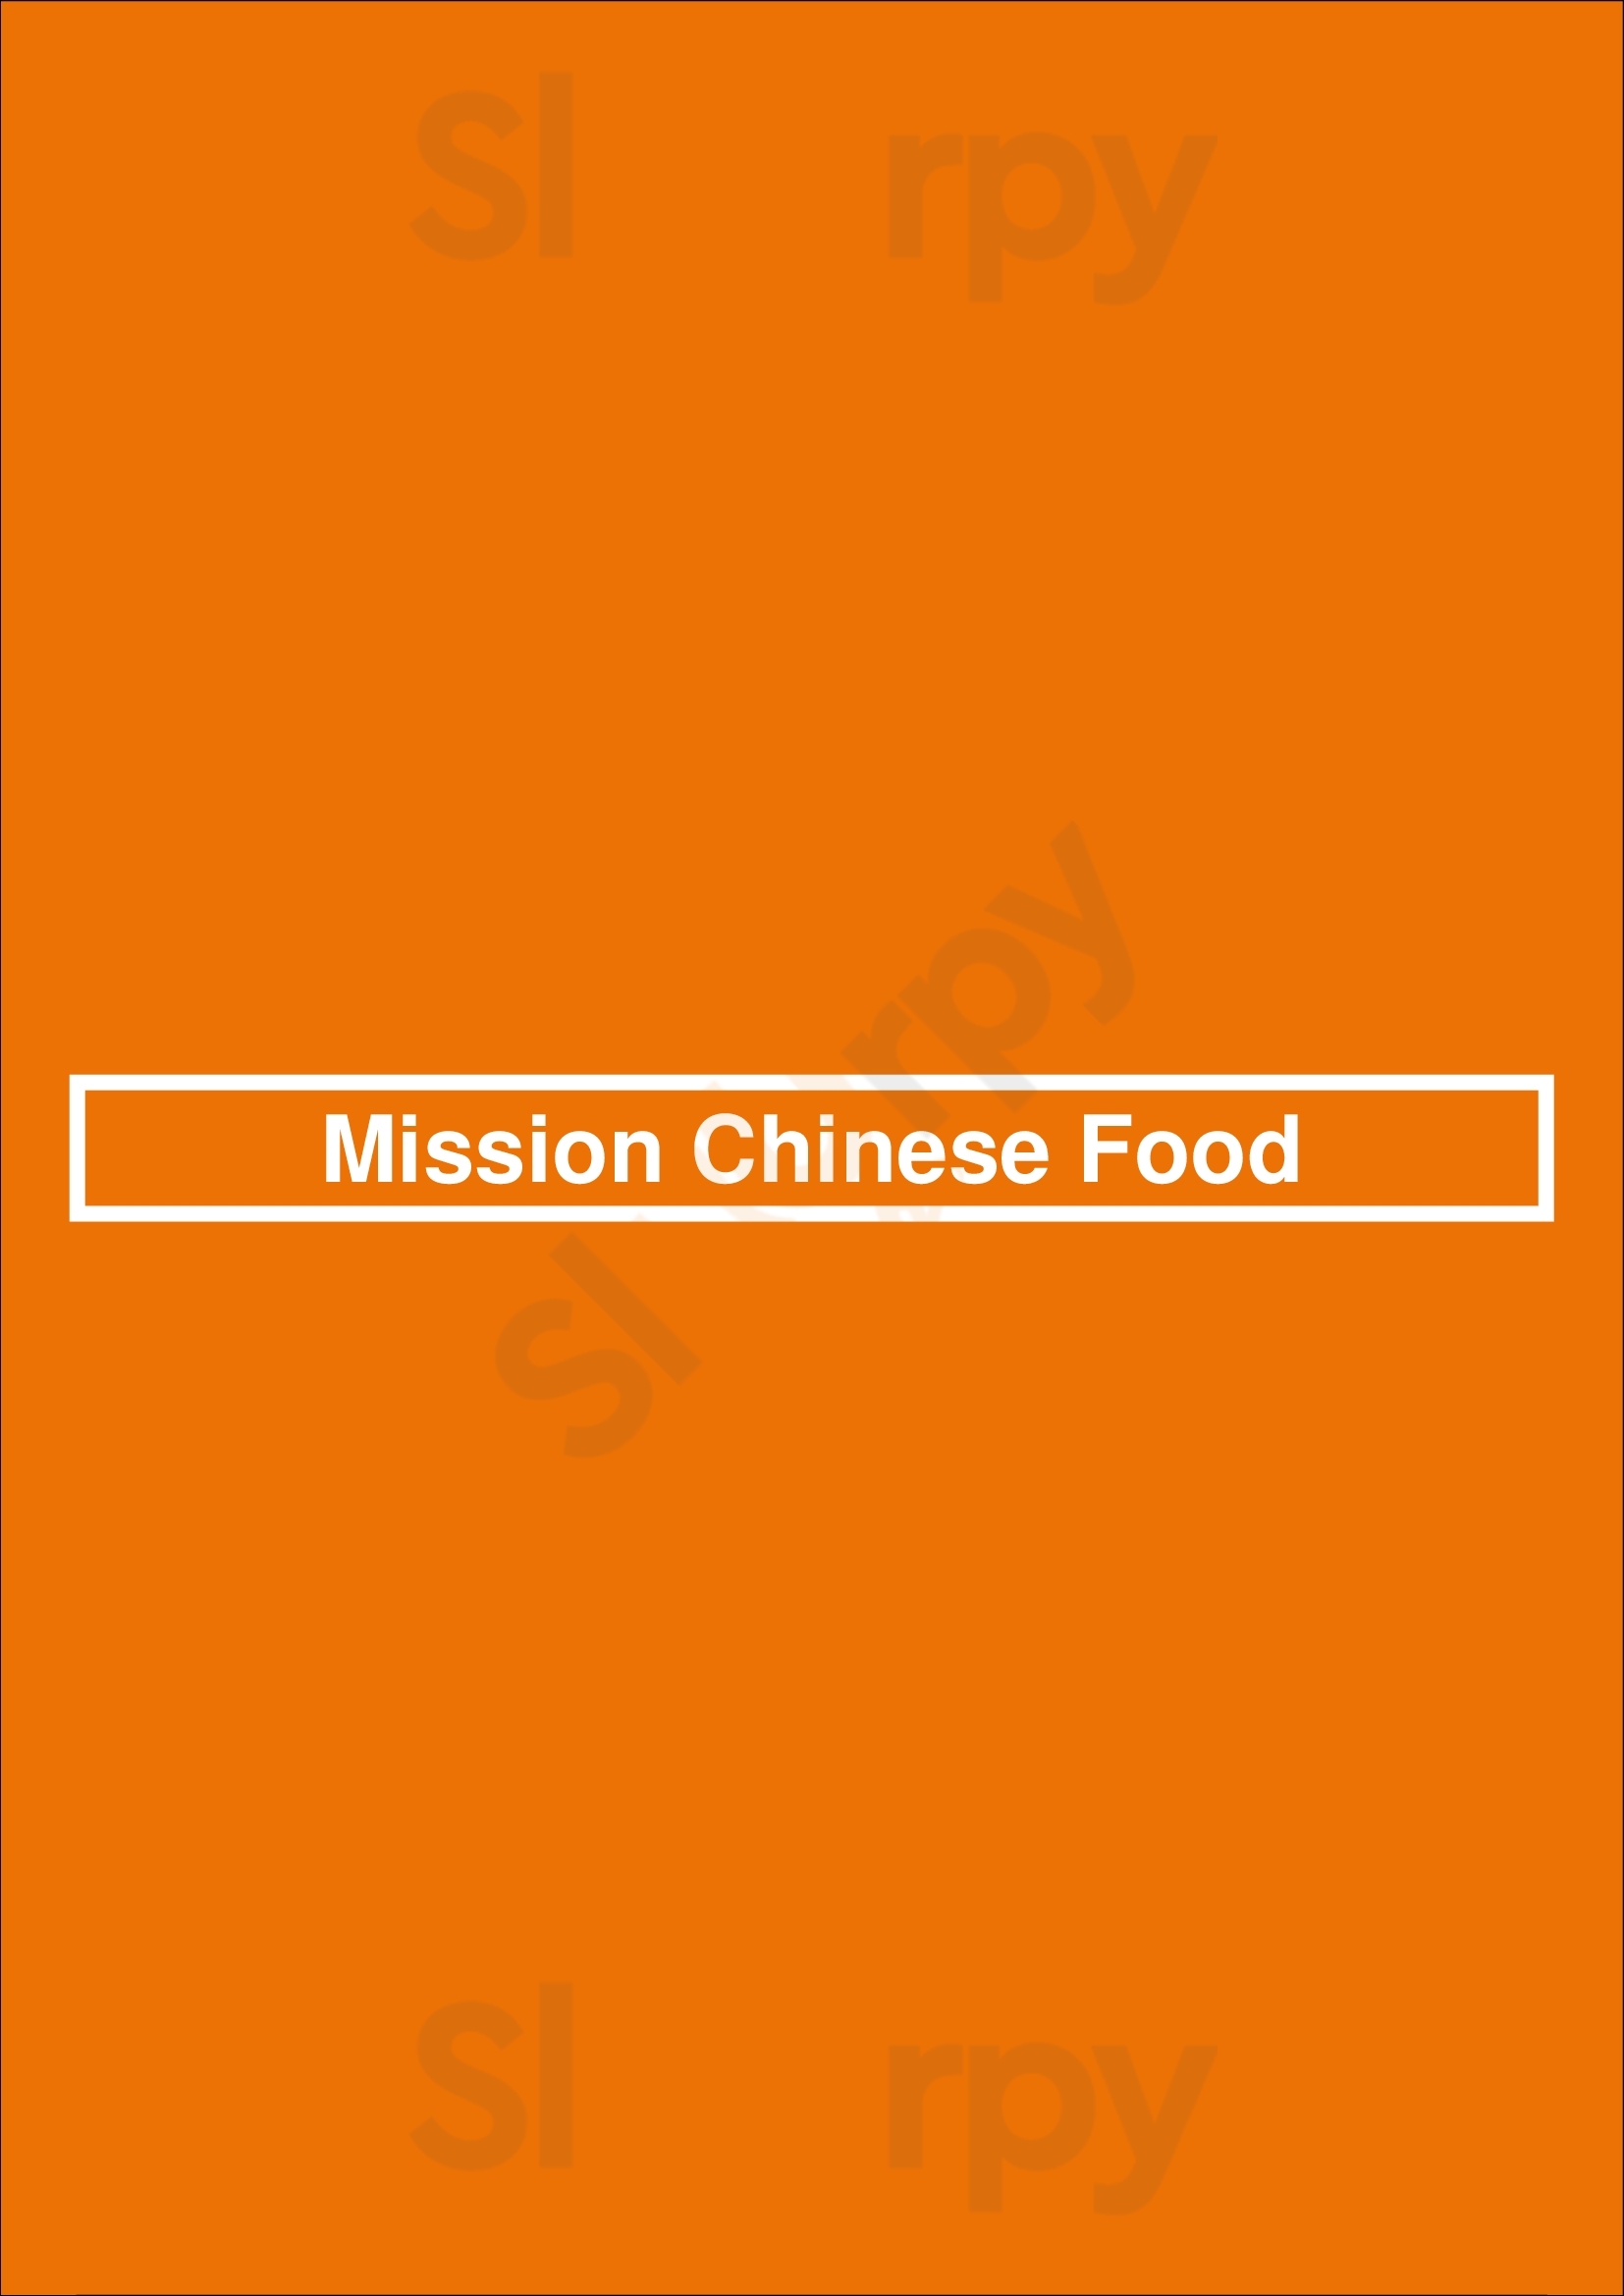 Mission Chinese Food San Francisco Menu - 1